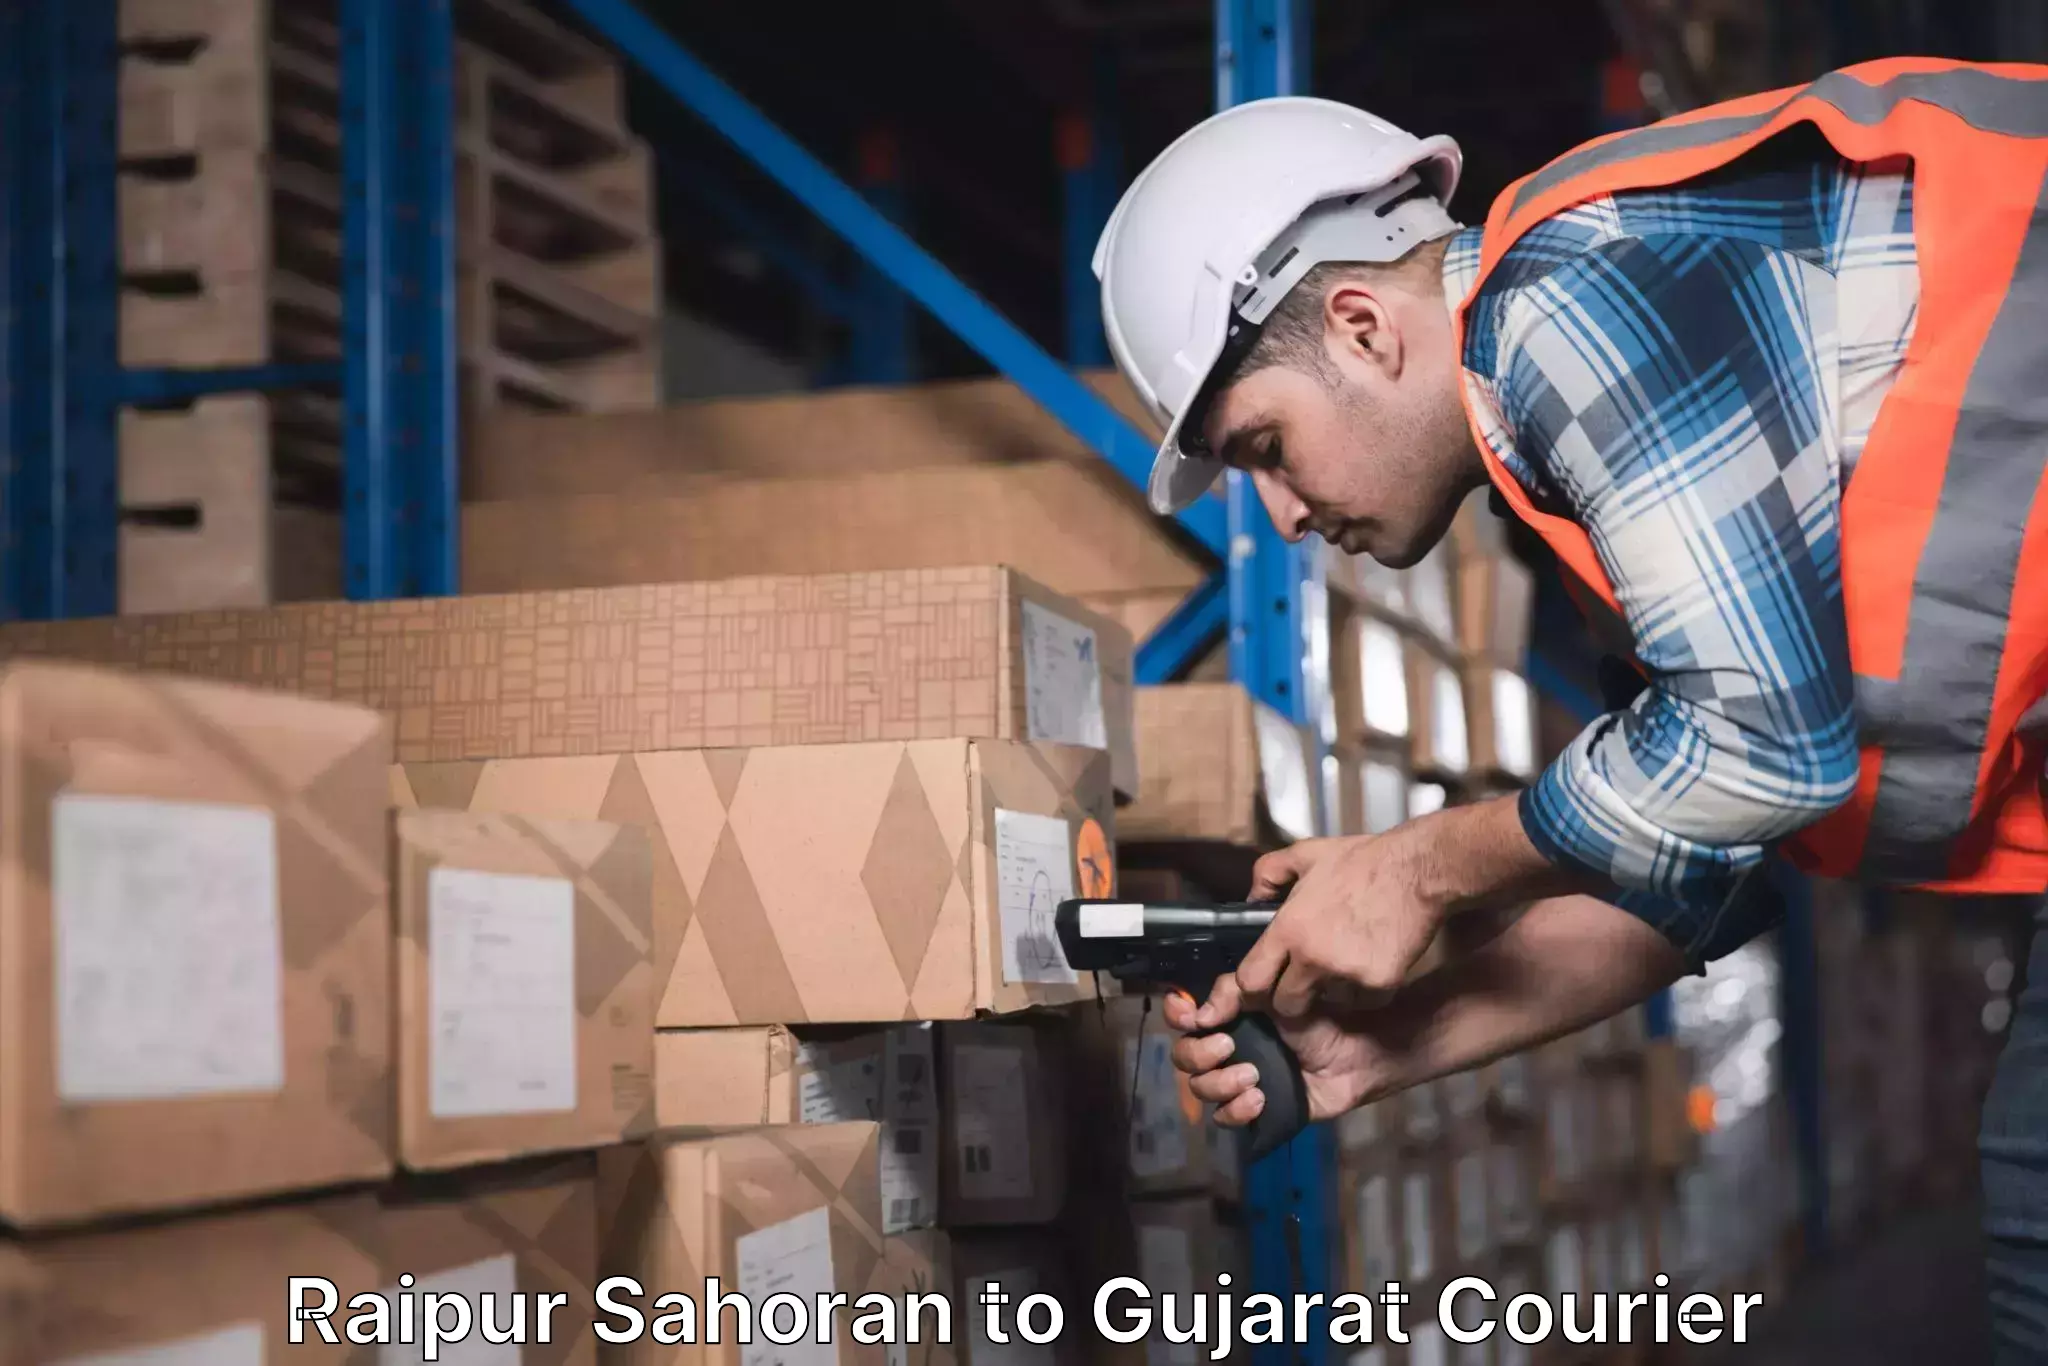 Courier service comparison Raipur Sahoran to Kadi